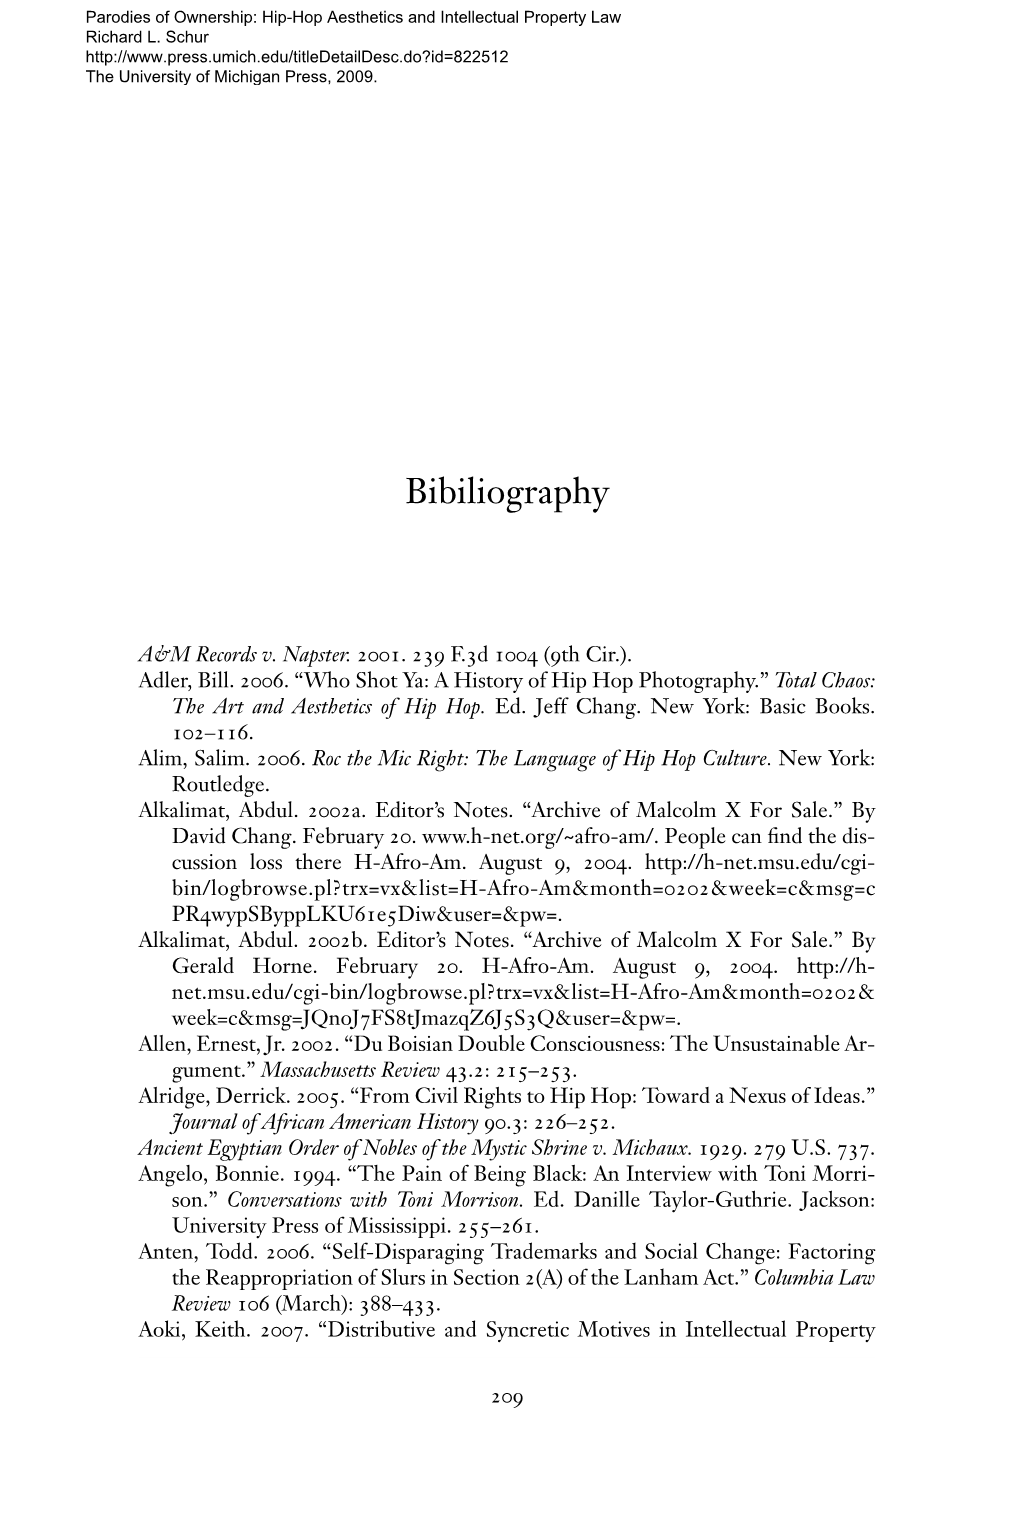 Bibiliography